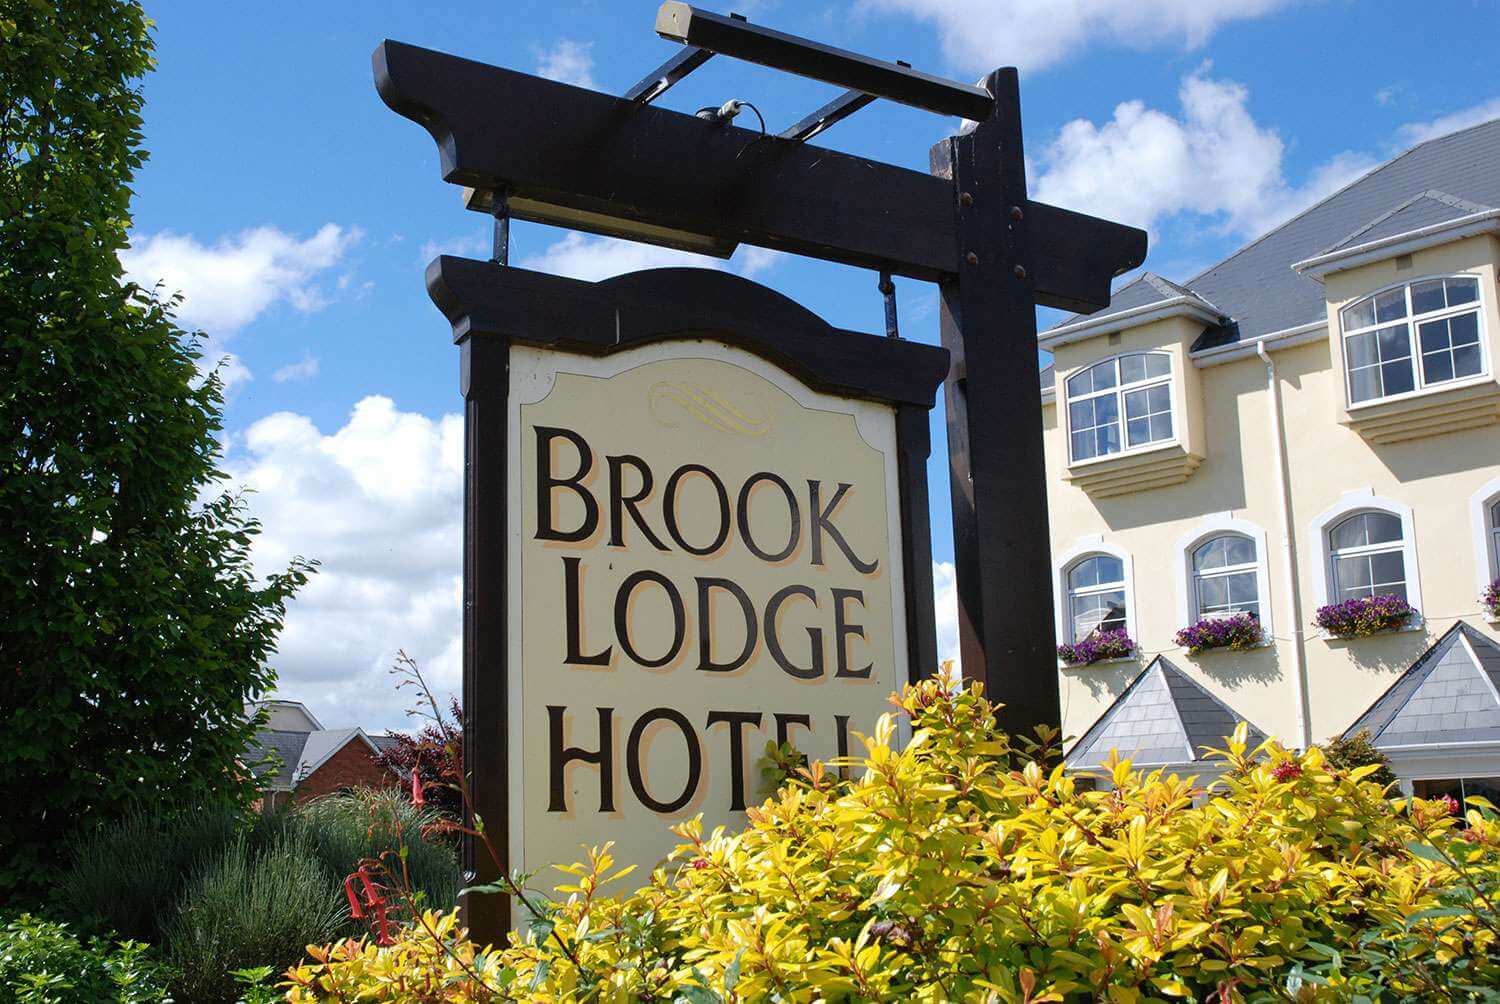 Brook Lodge Hotel